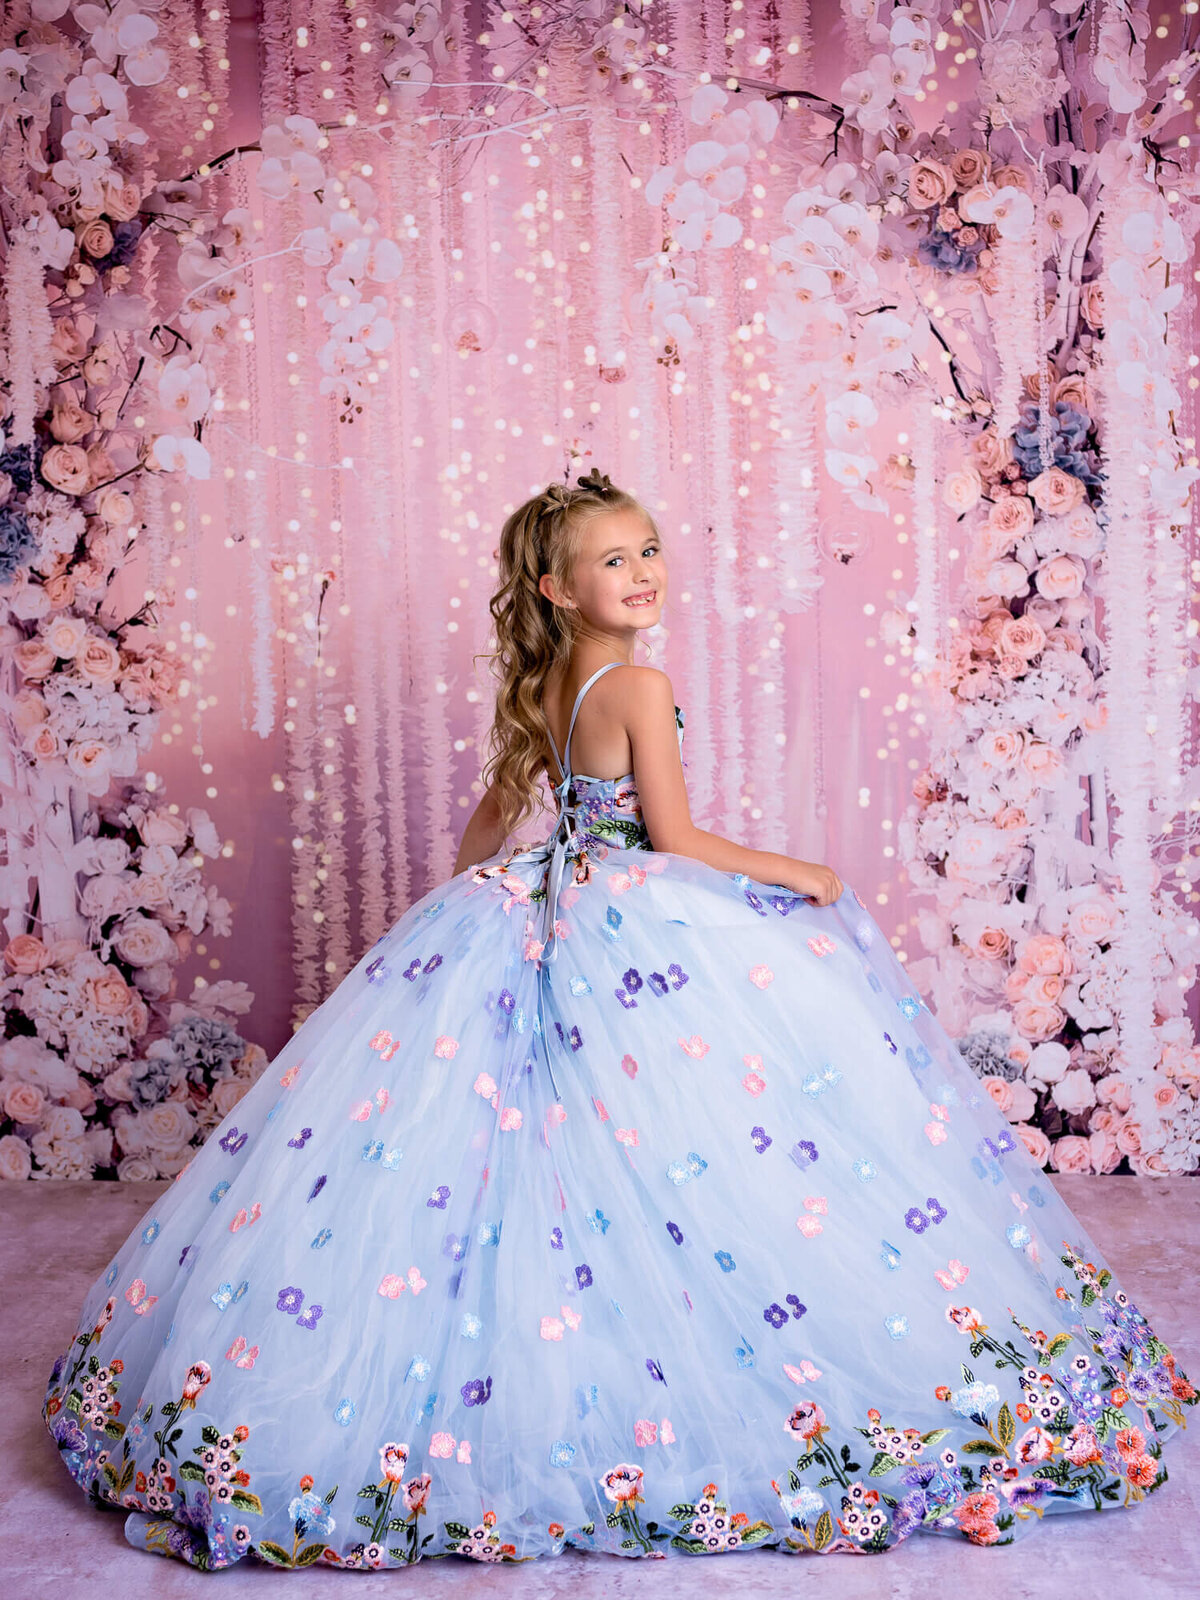 Prescott kids photographer Melissa Byrne specializes in Dream Dress sessions